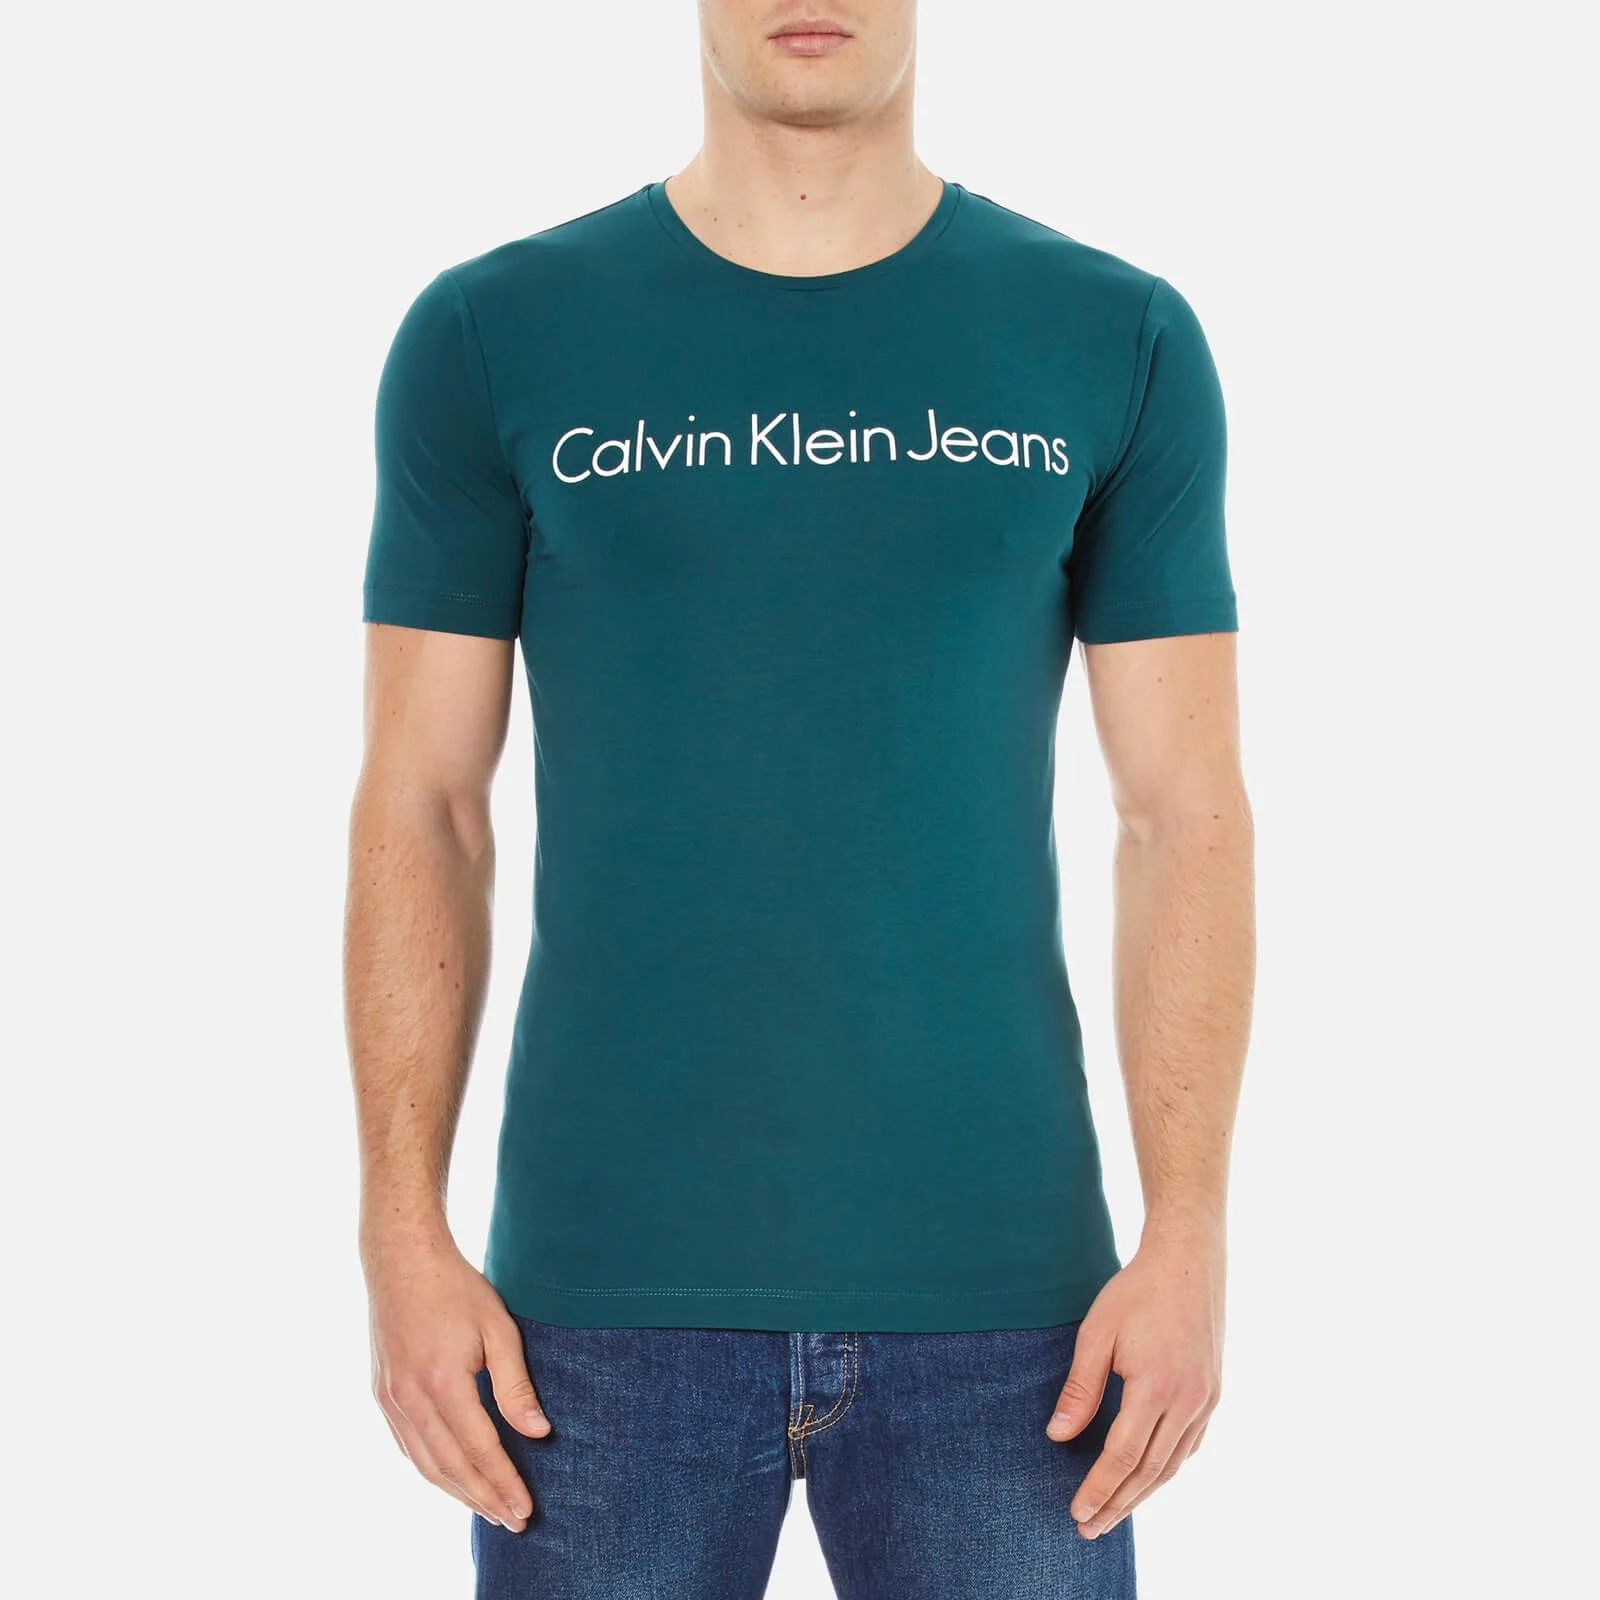 Calvin Klein Men's Tamas 2 T-Shirt - Deep Teal Image 1